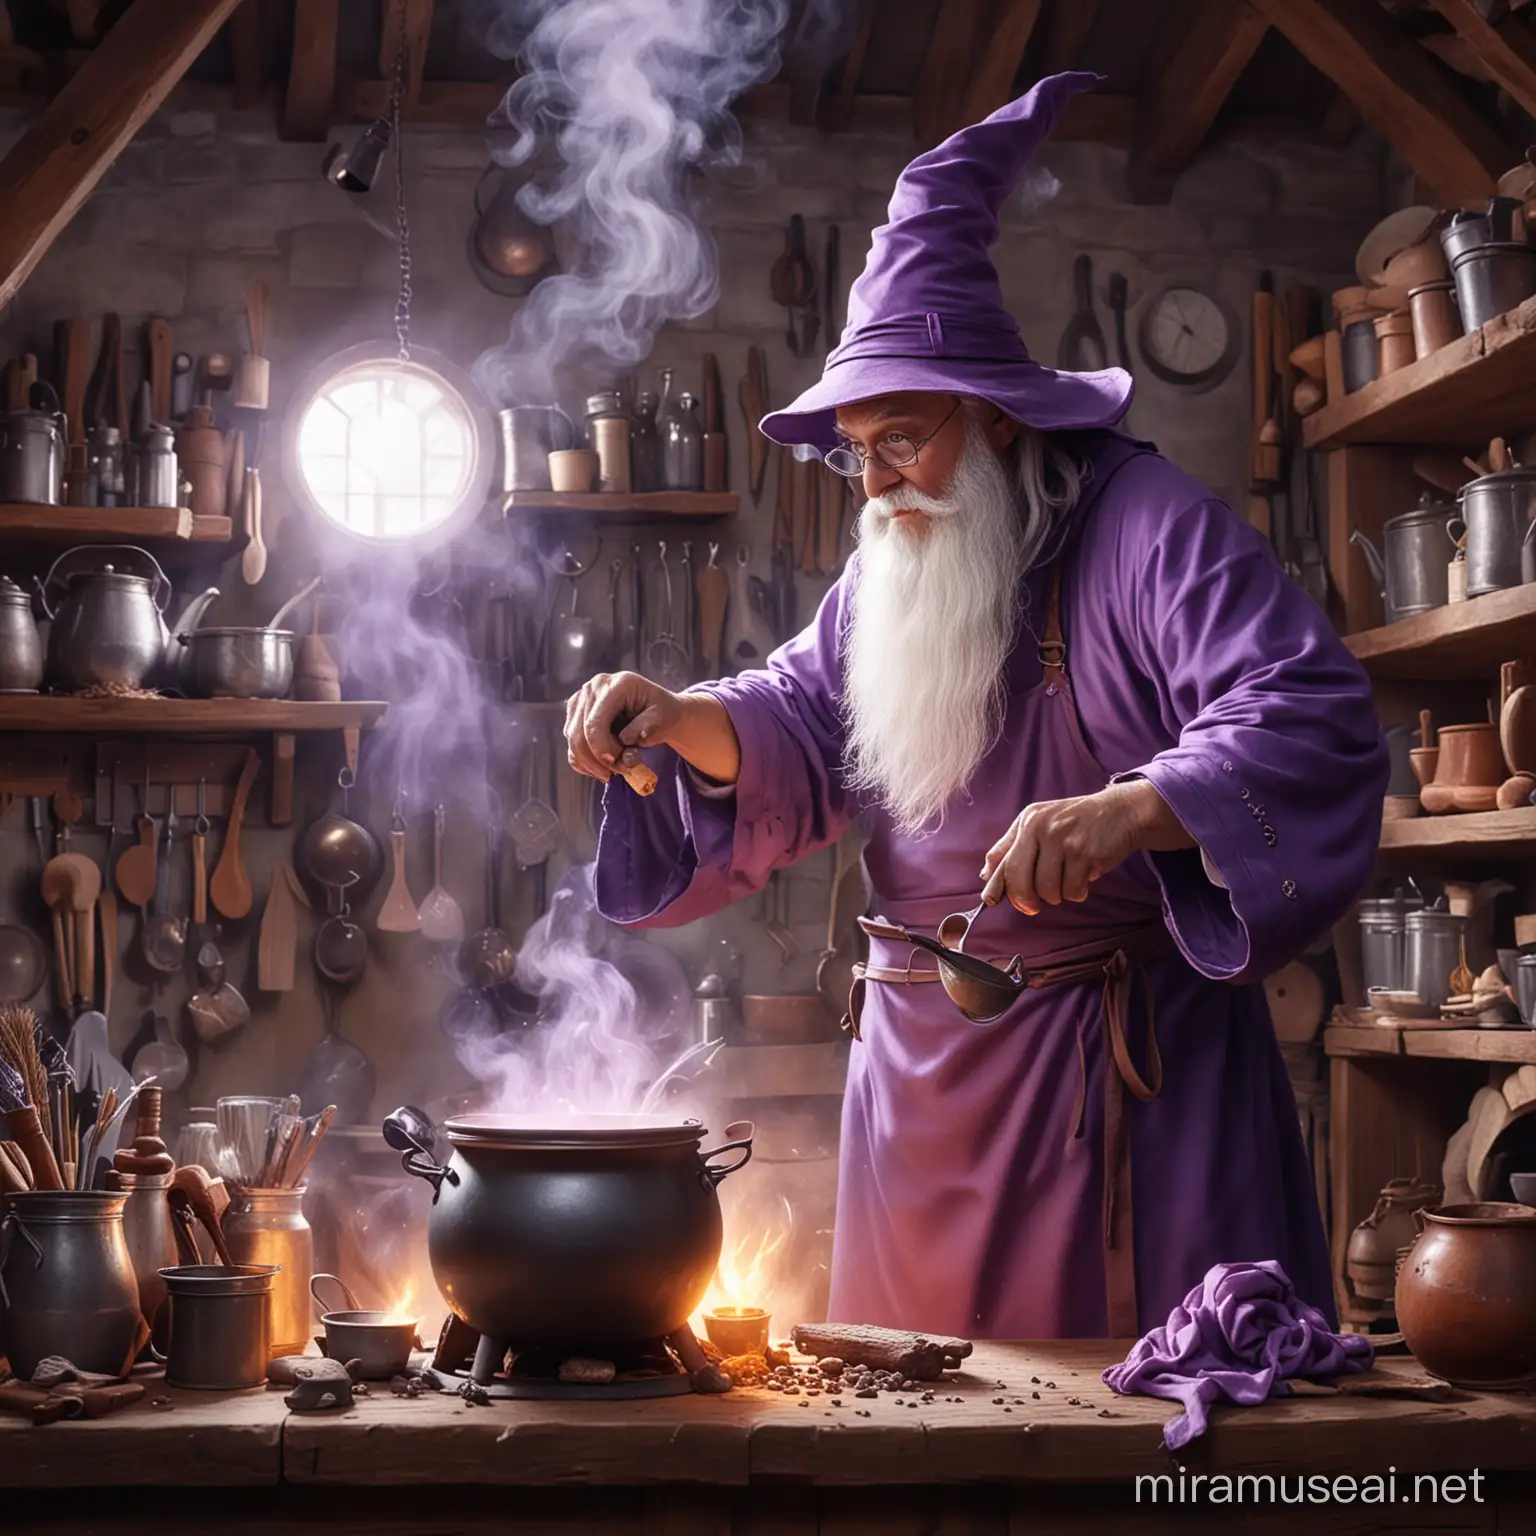 Enchanting Wizard Stirring Magic in Workshop Cauldron